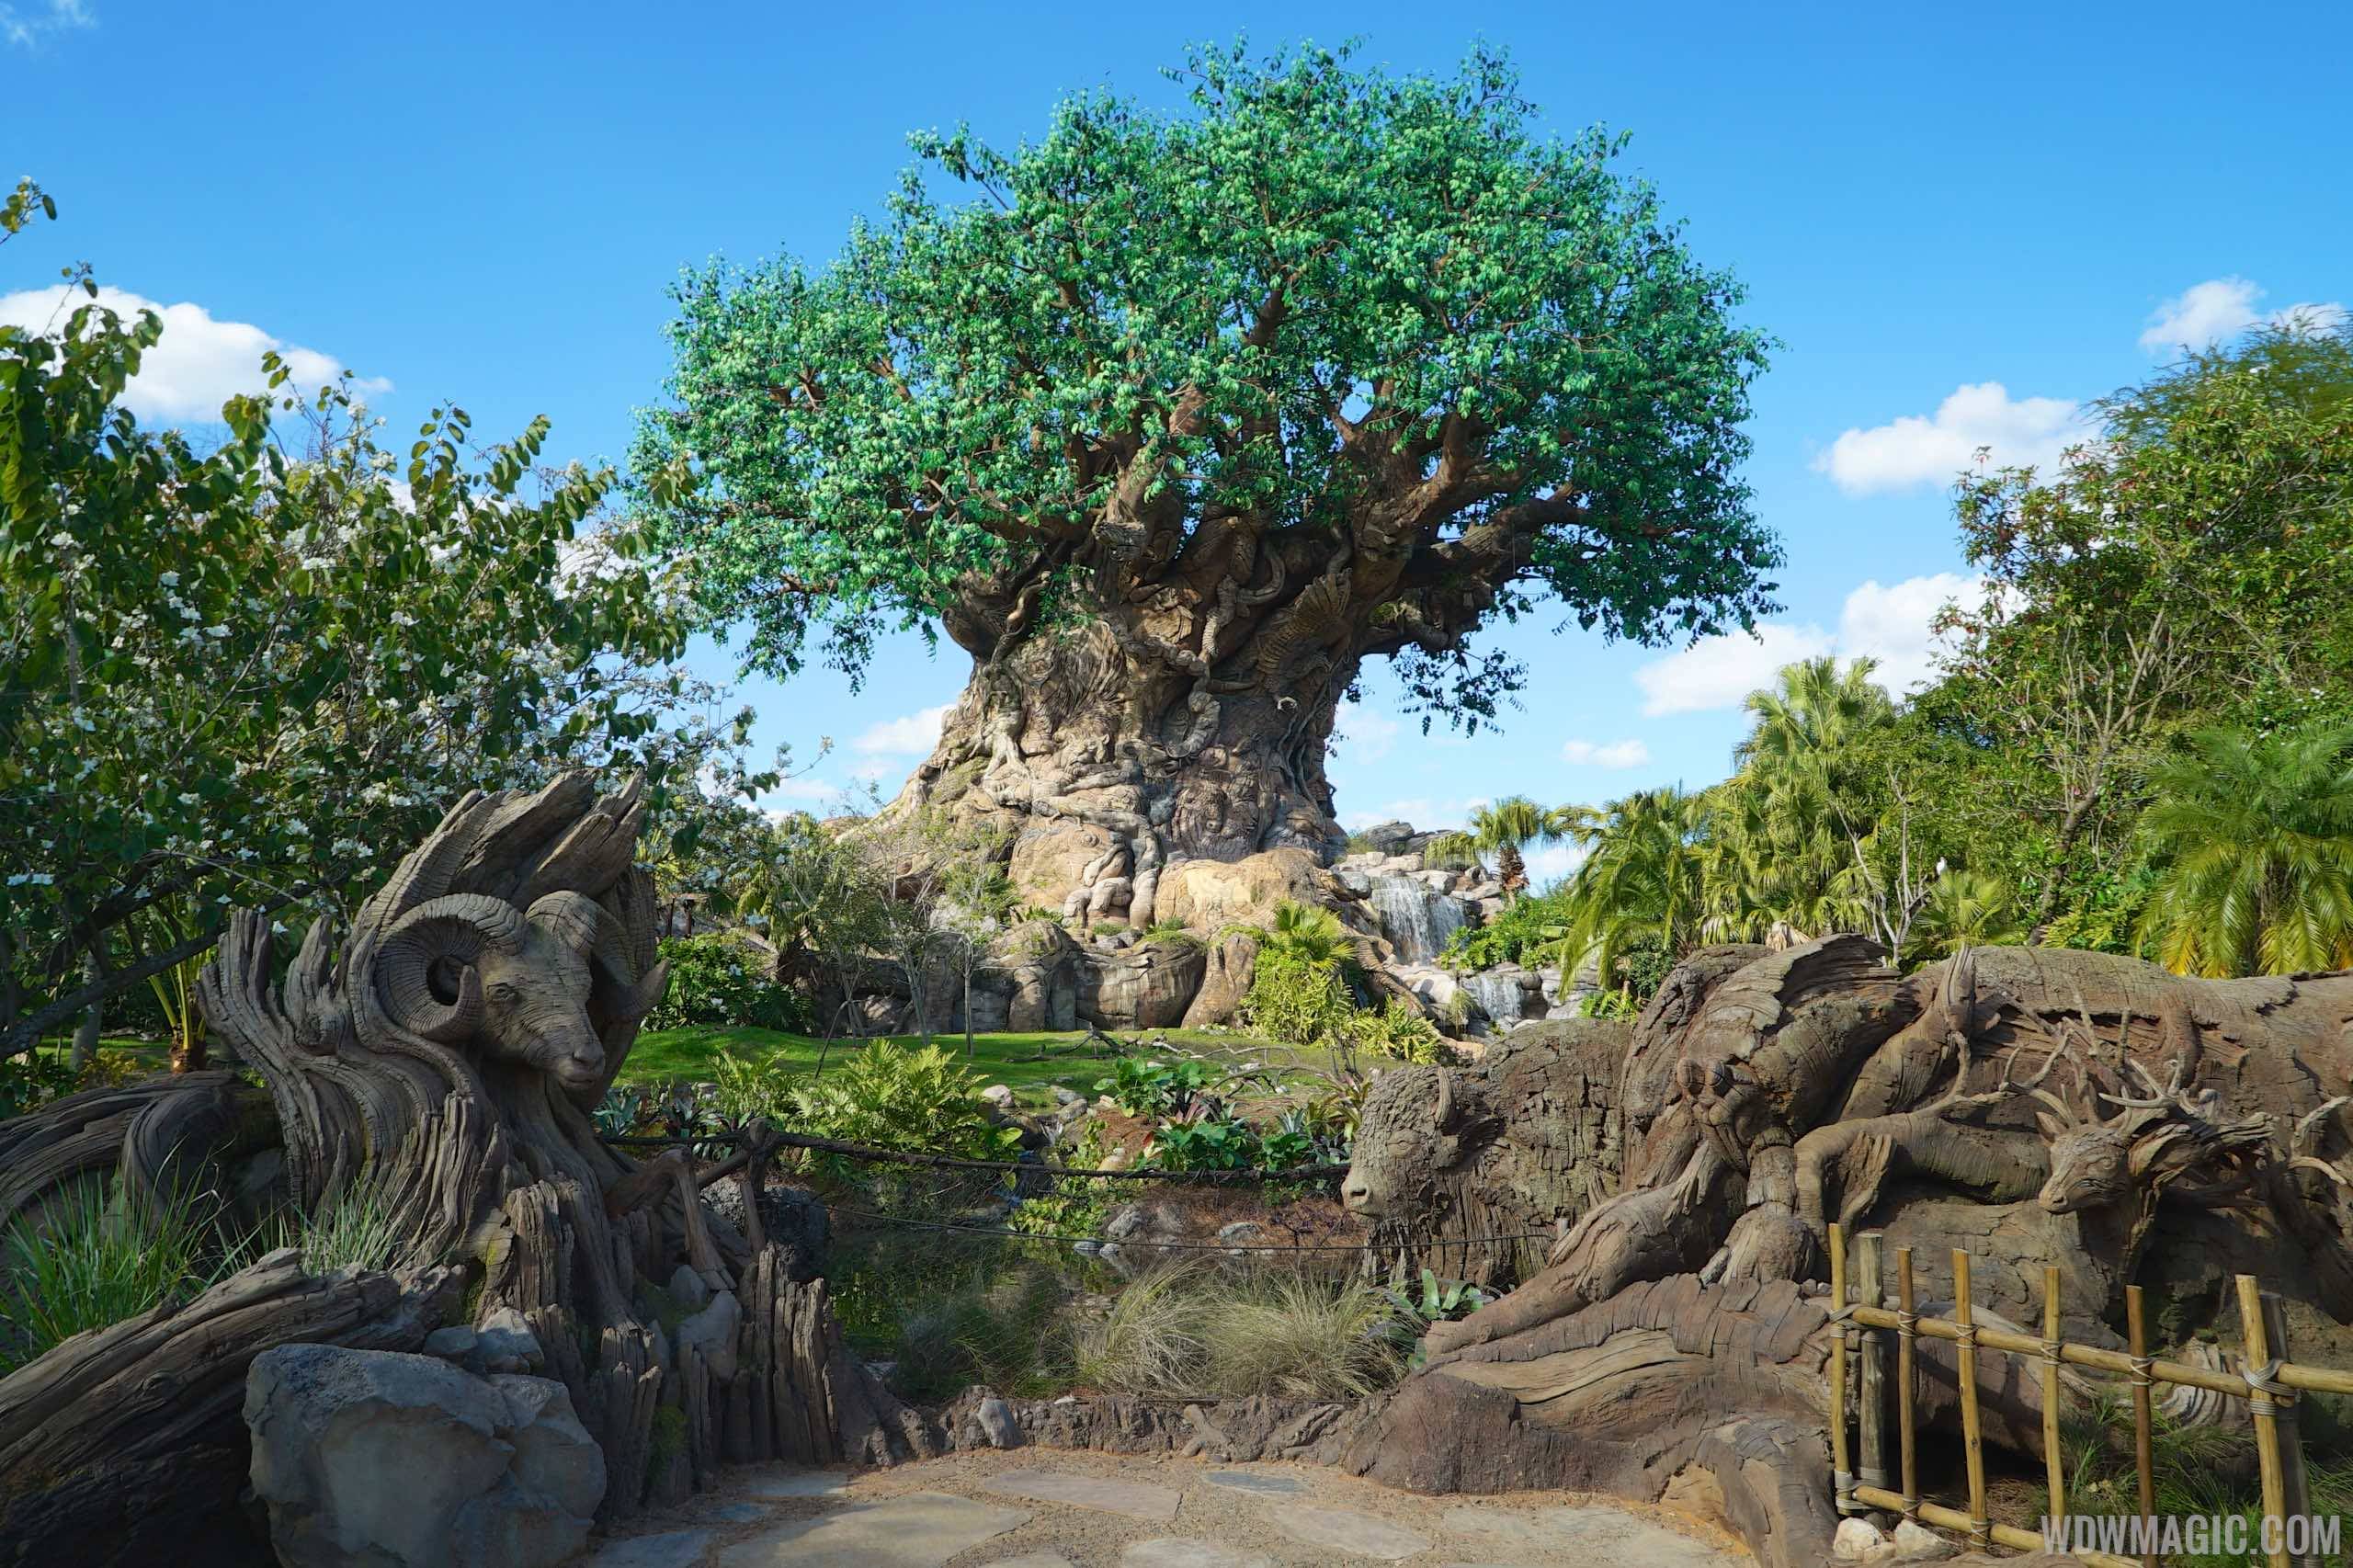 Disney's Animal Kingdom gains 2 hours per day